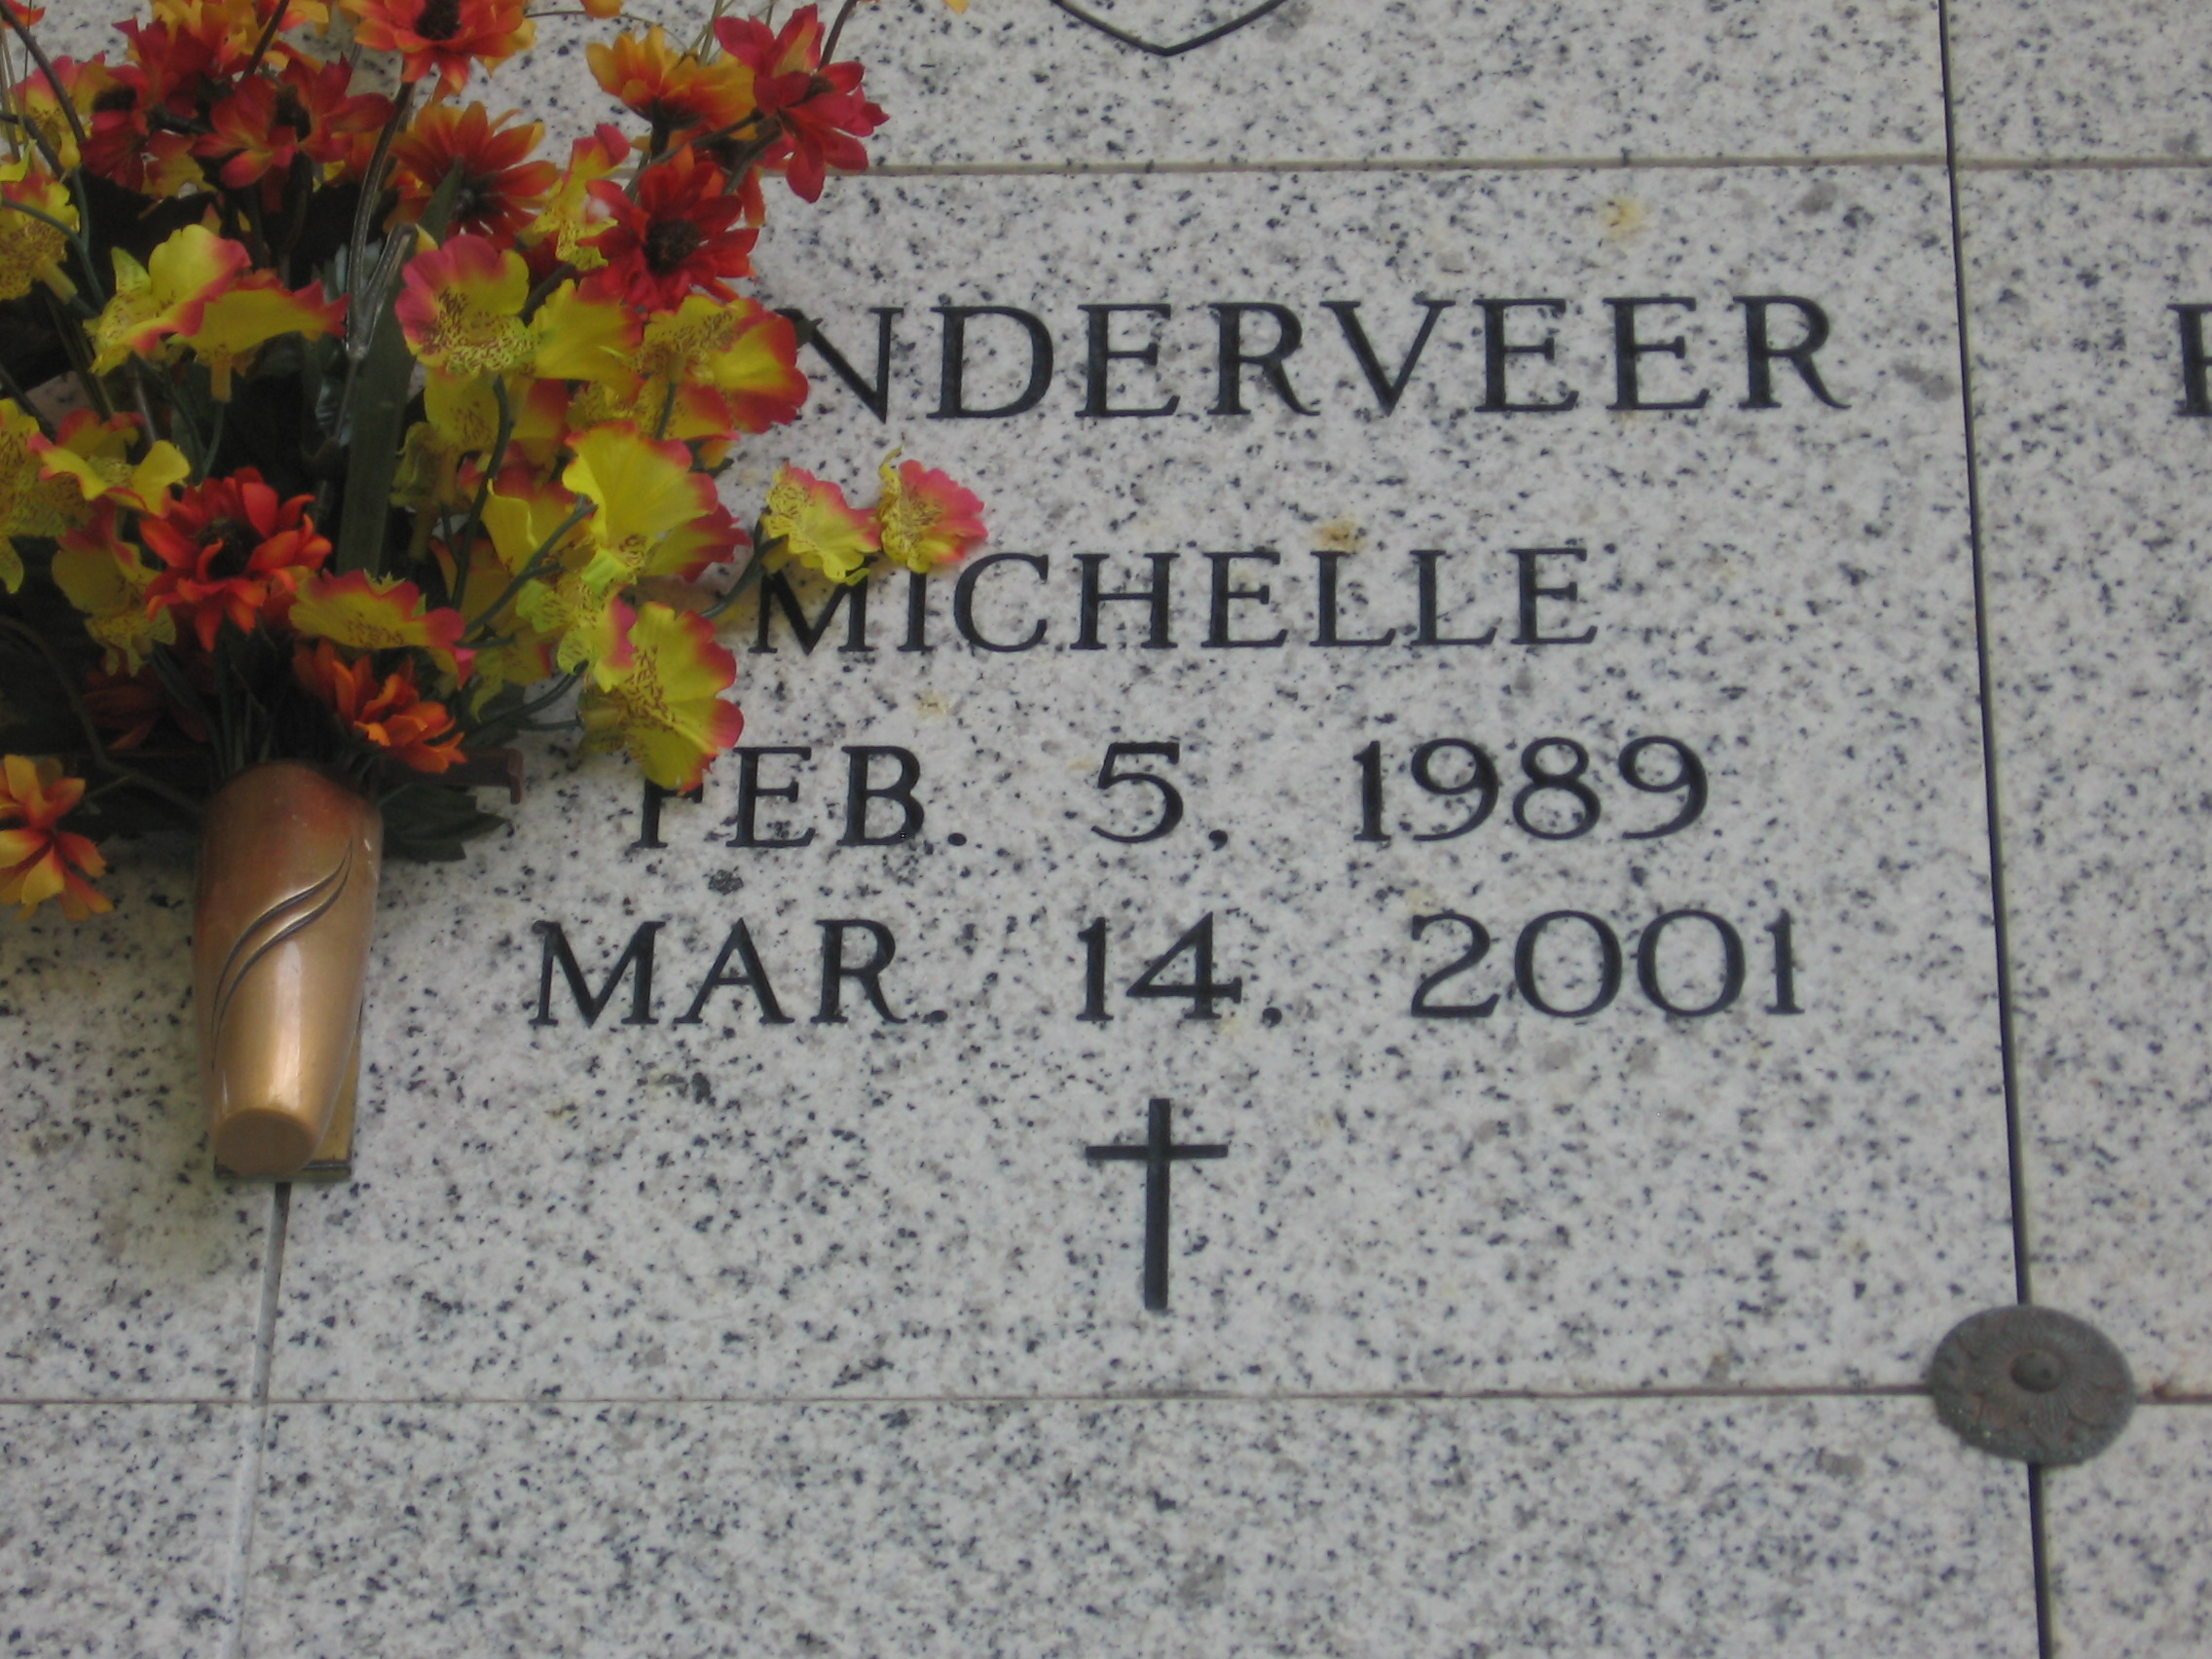 Michelle Vanderveer